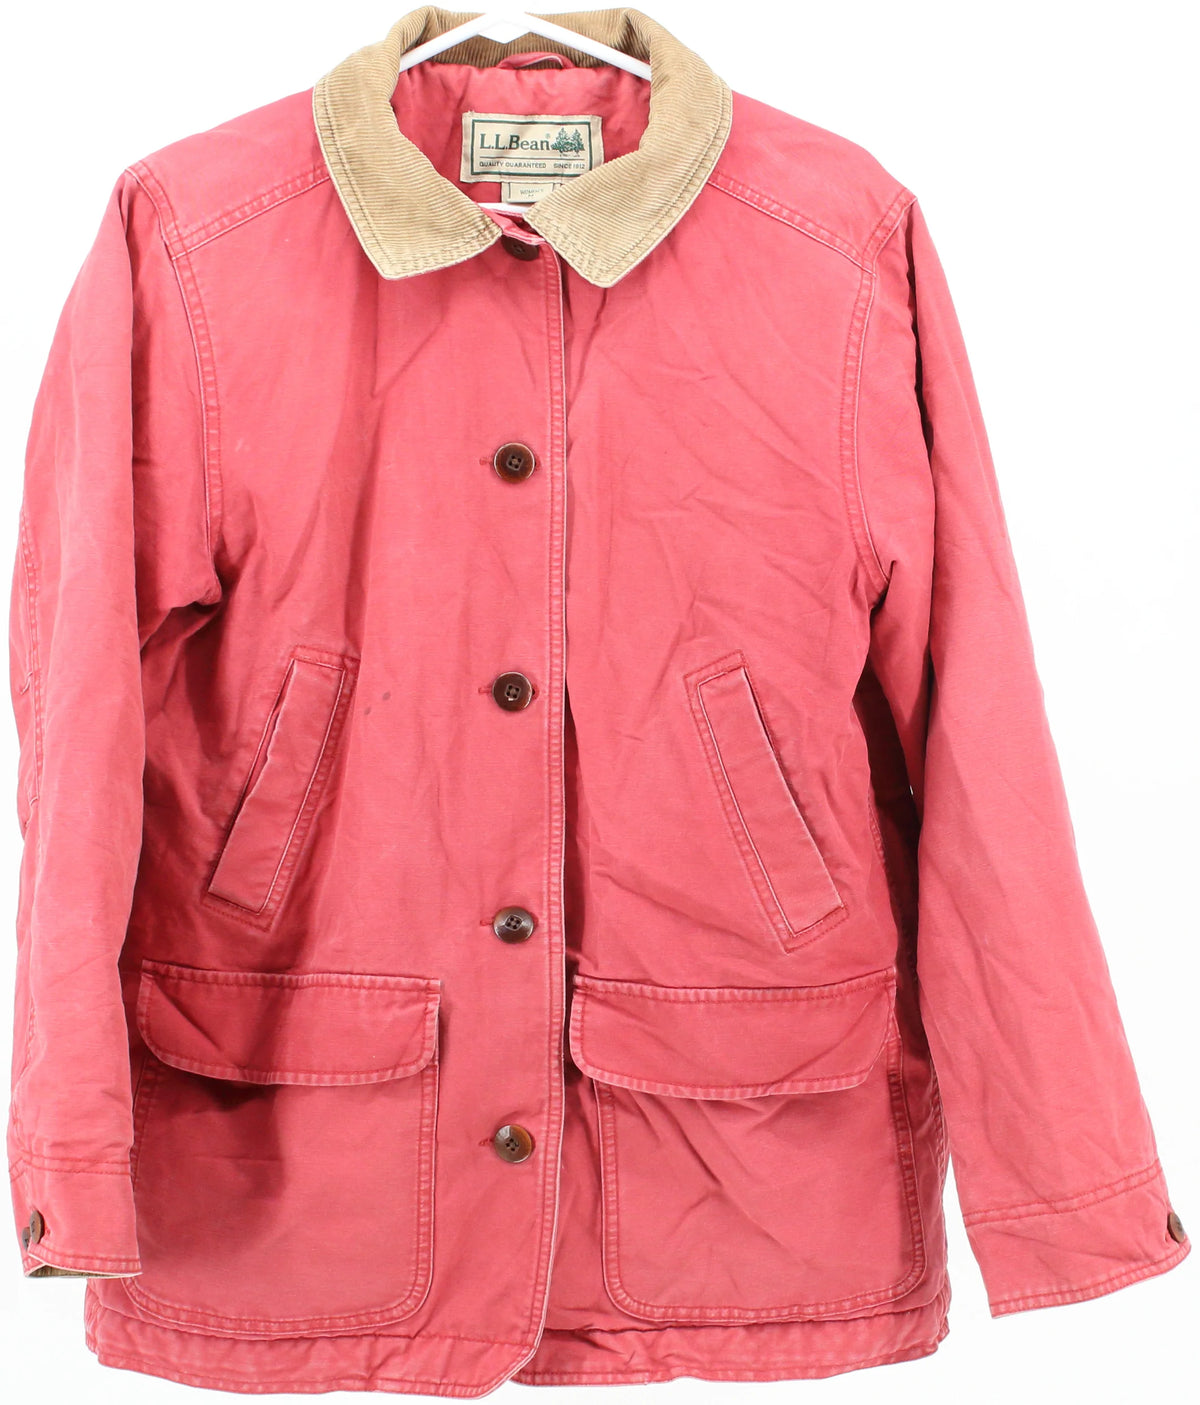 L.L.Bean Pink Jacket With Beige Corduroy Collar